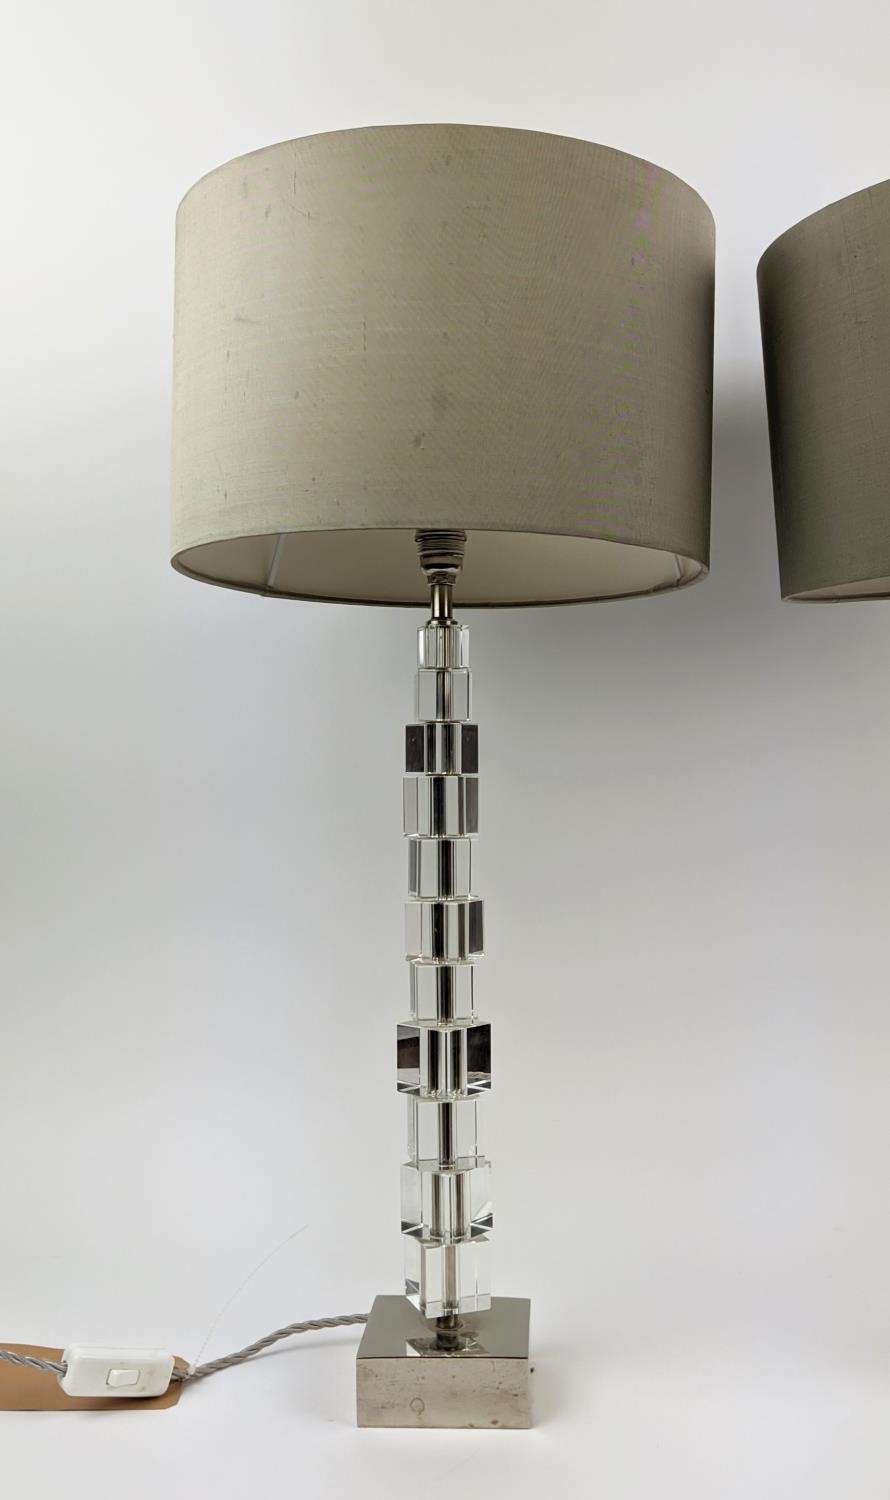 PORTA ROMANA TABLE LAMPS, a pair, with Porta Romana shades, 66cm H. (2) - Image 2 of 8